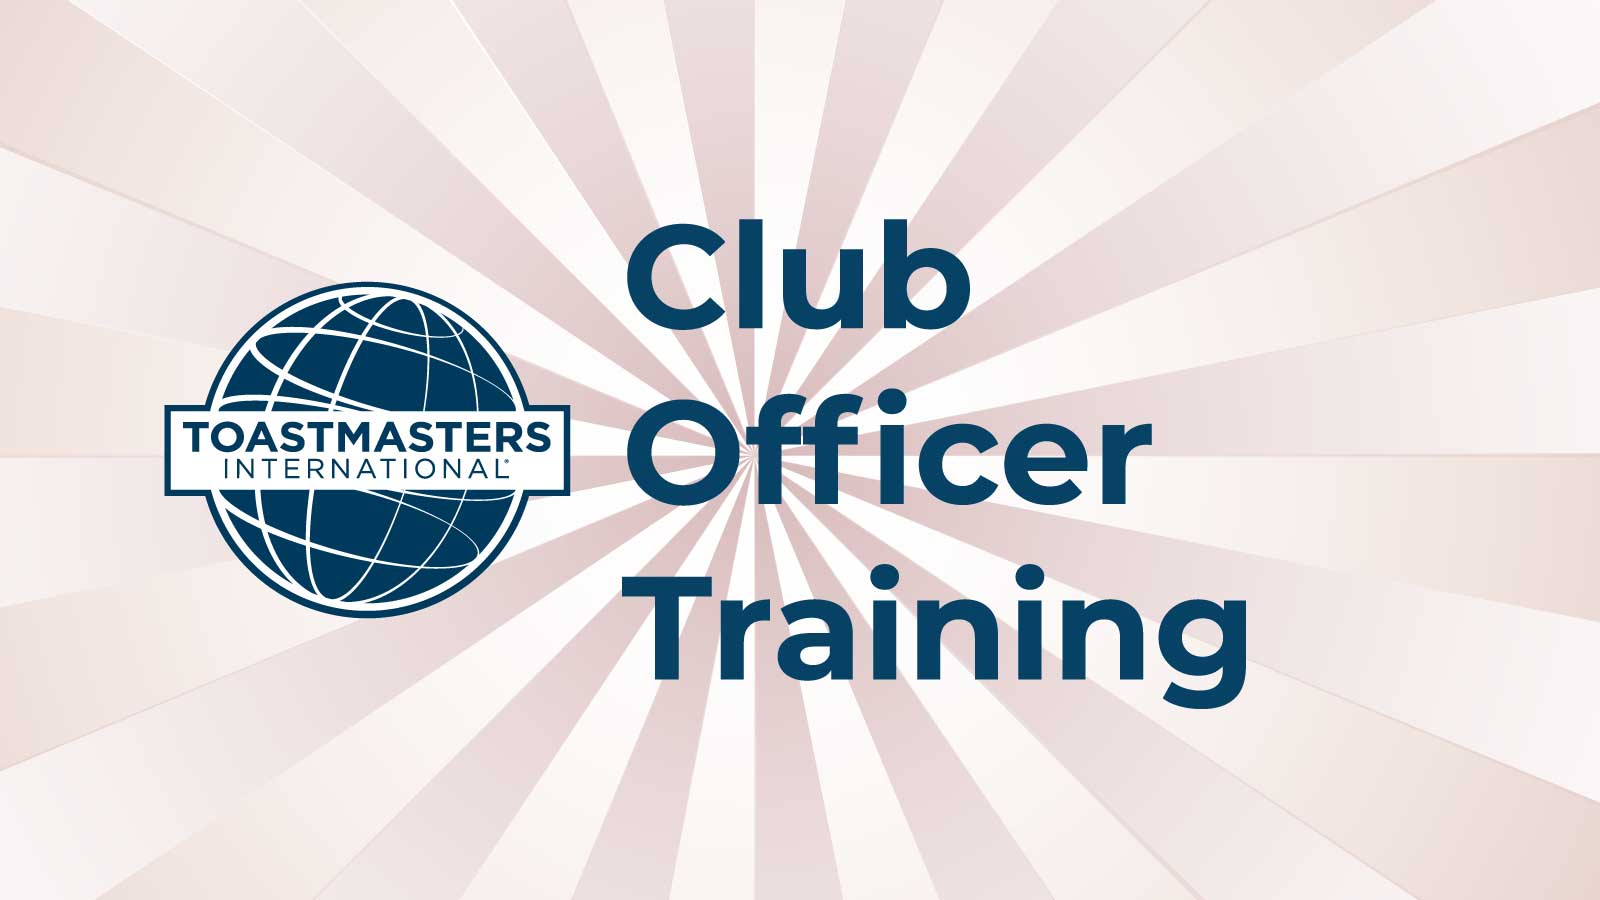 Club Officers Training